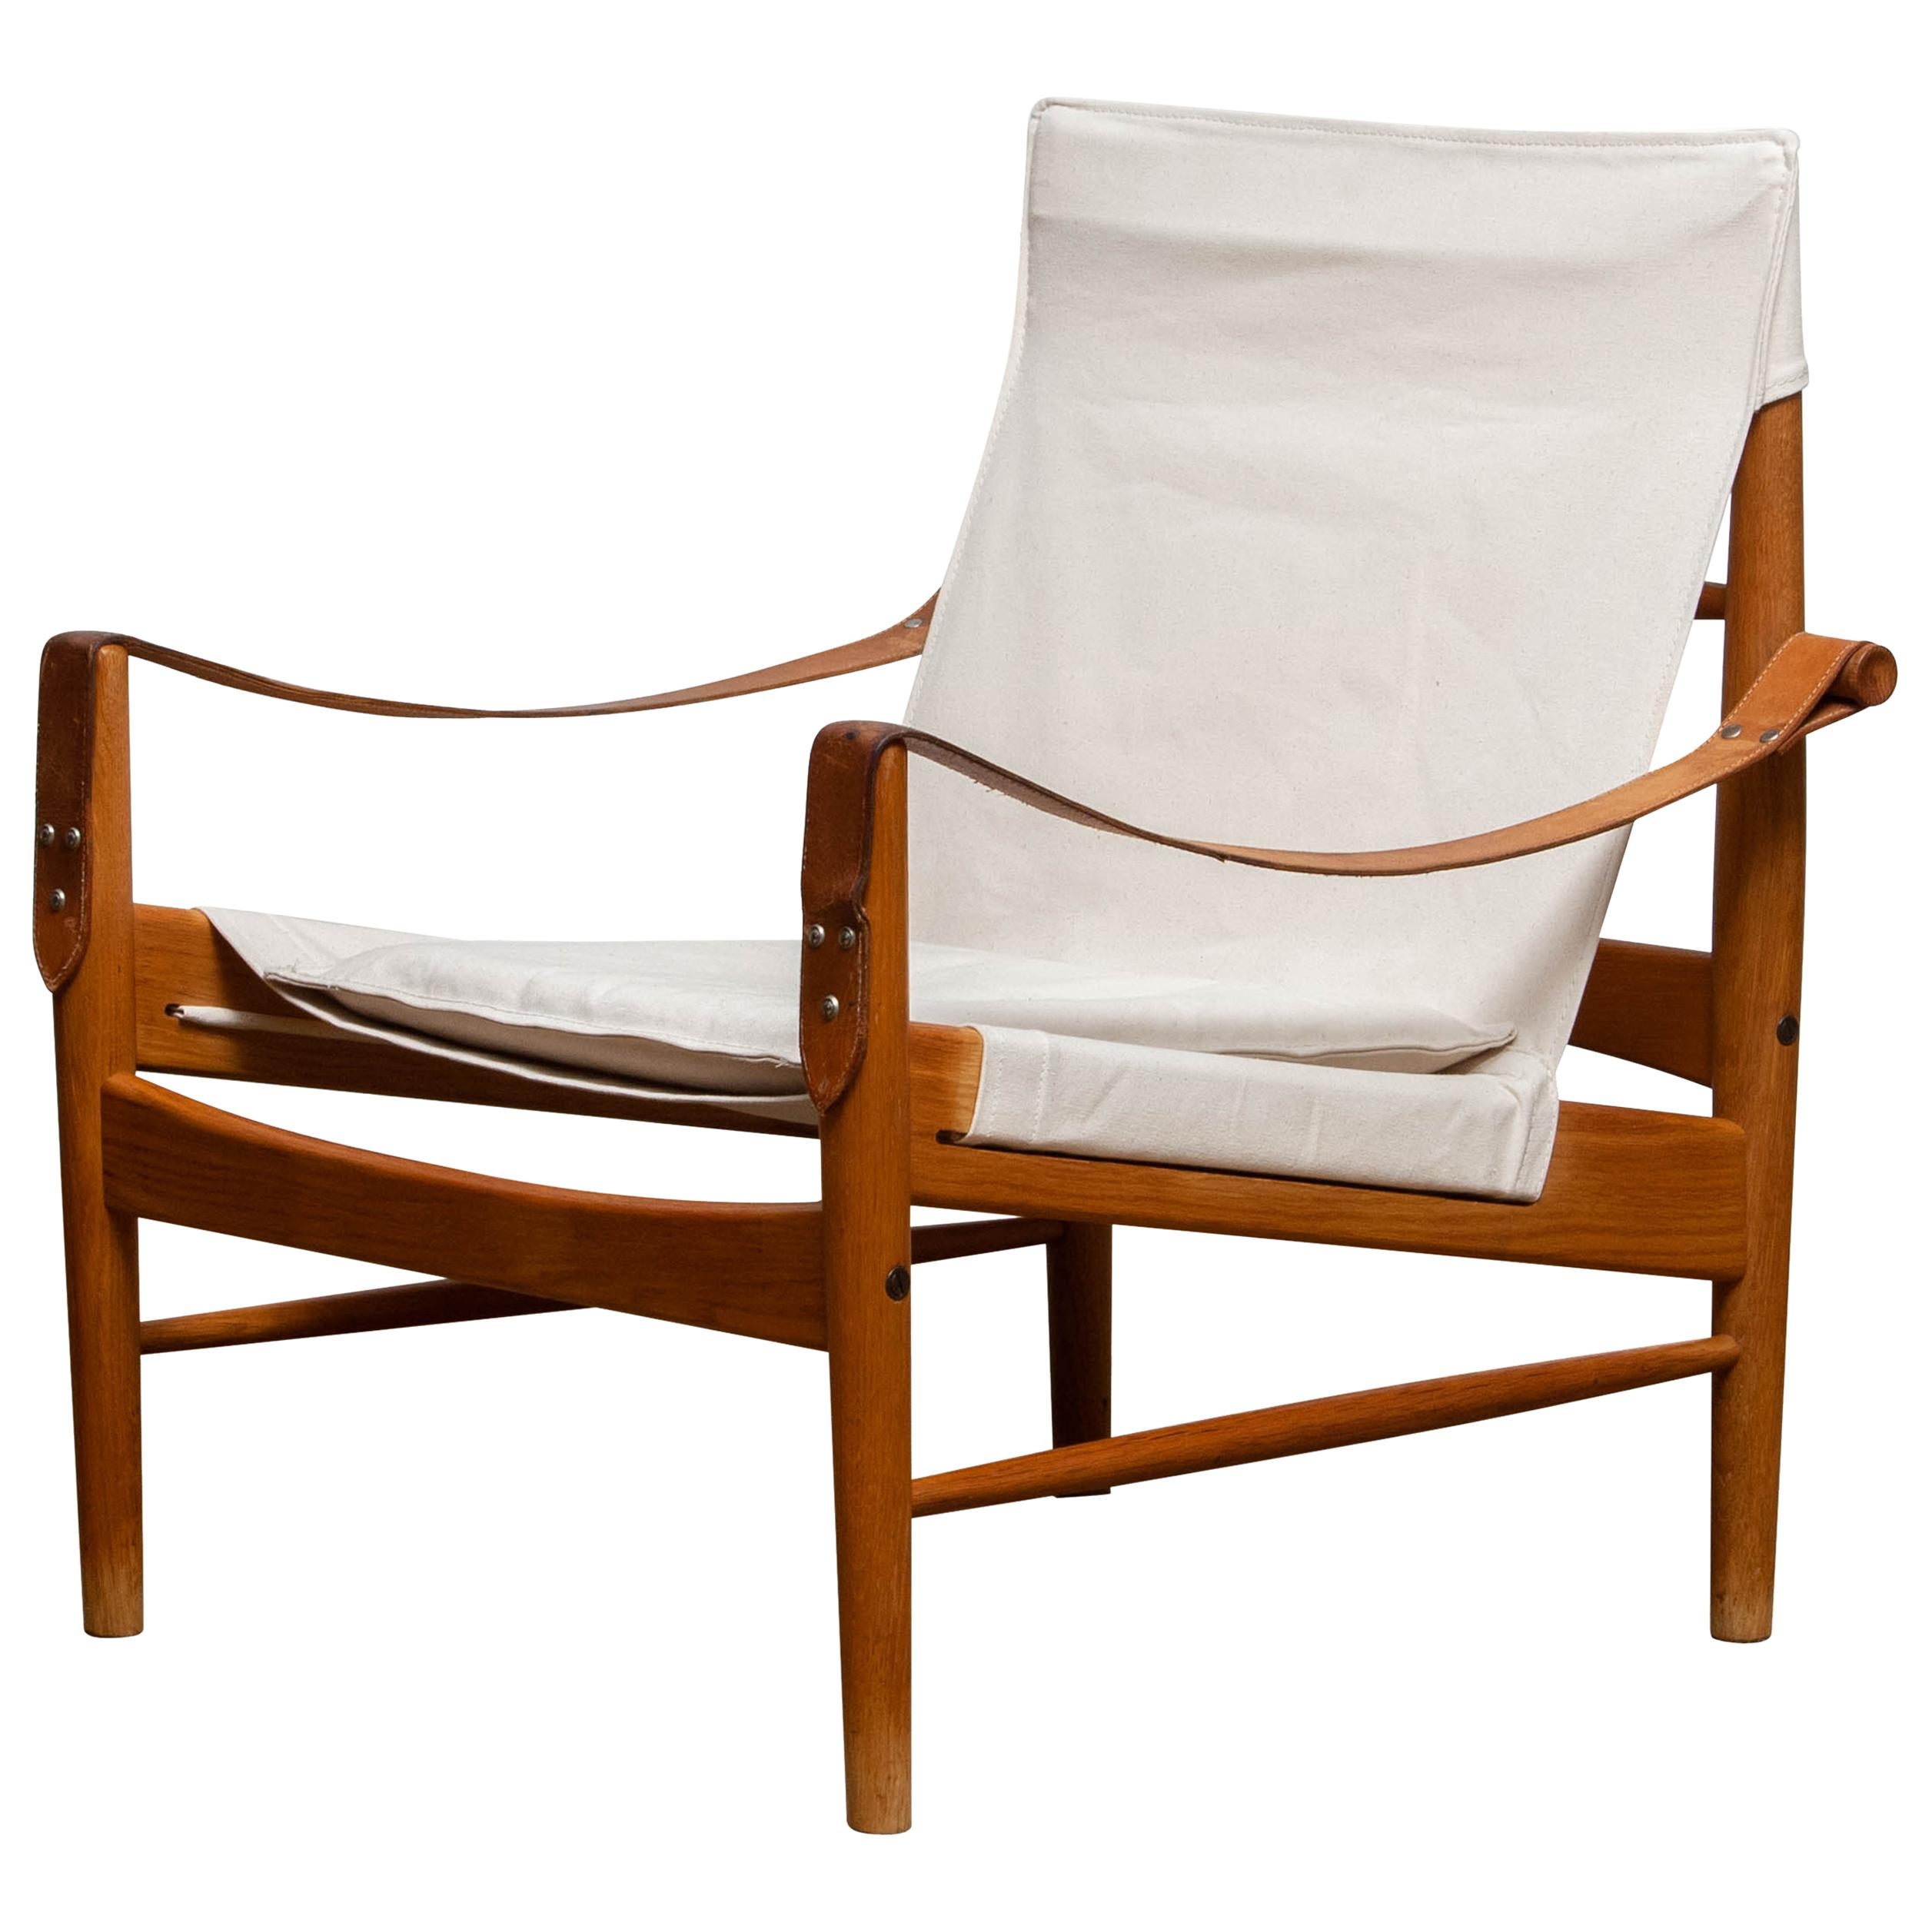 1960s, Safari Lounge Chair by Hans Olsen for Viska Möbler in Kinna, Sweden 1960s